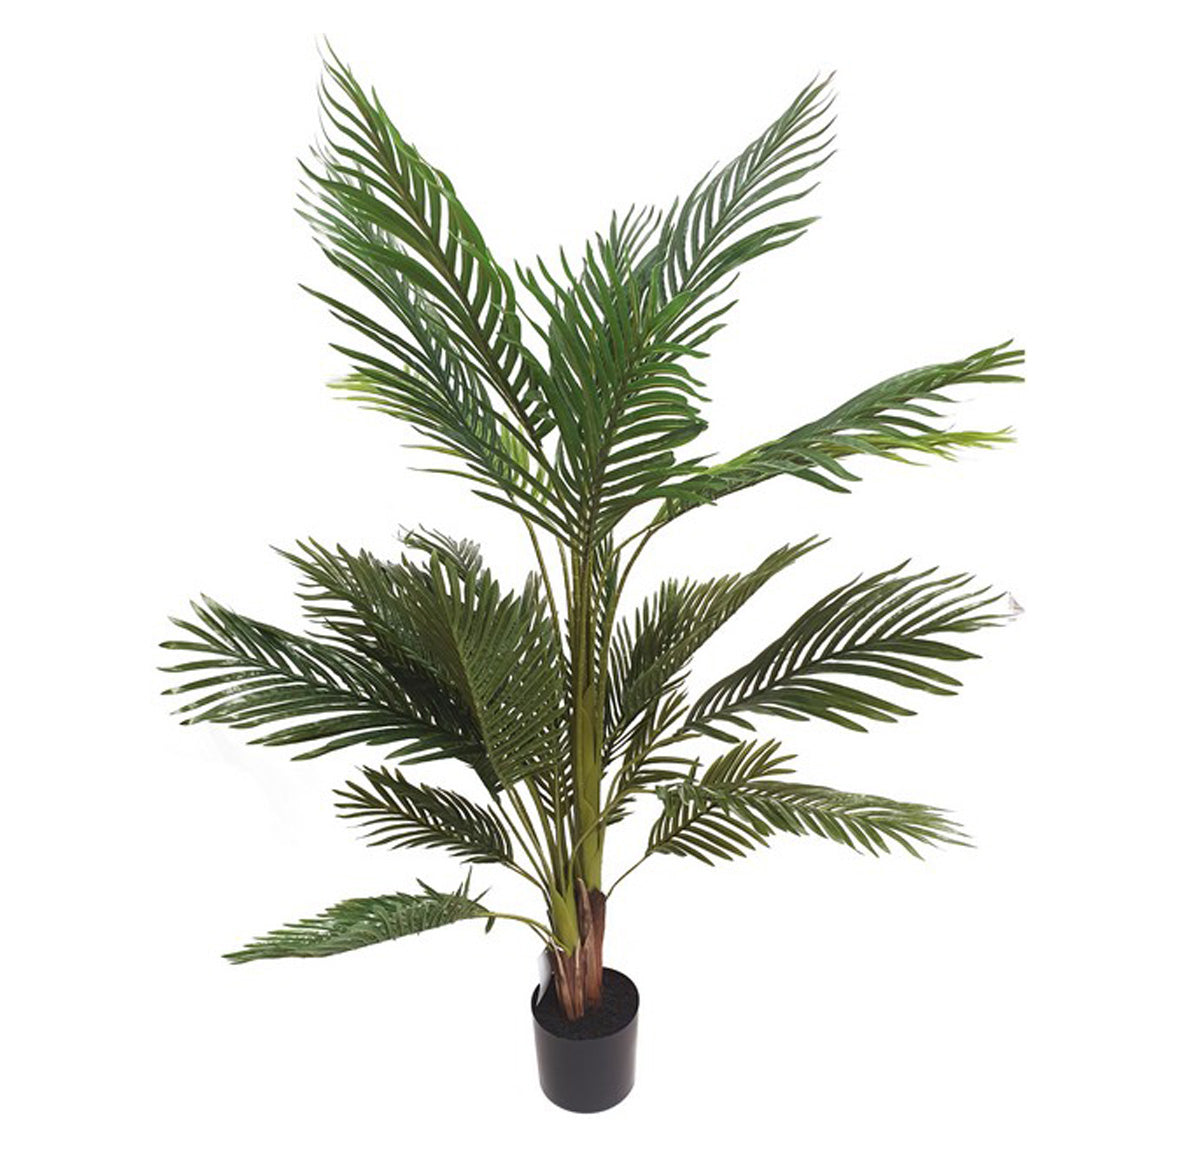 Artificial Palm Tree In Black Pot - 1.5mtr tall | Artificial Plants | Home Decor